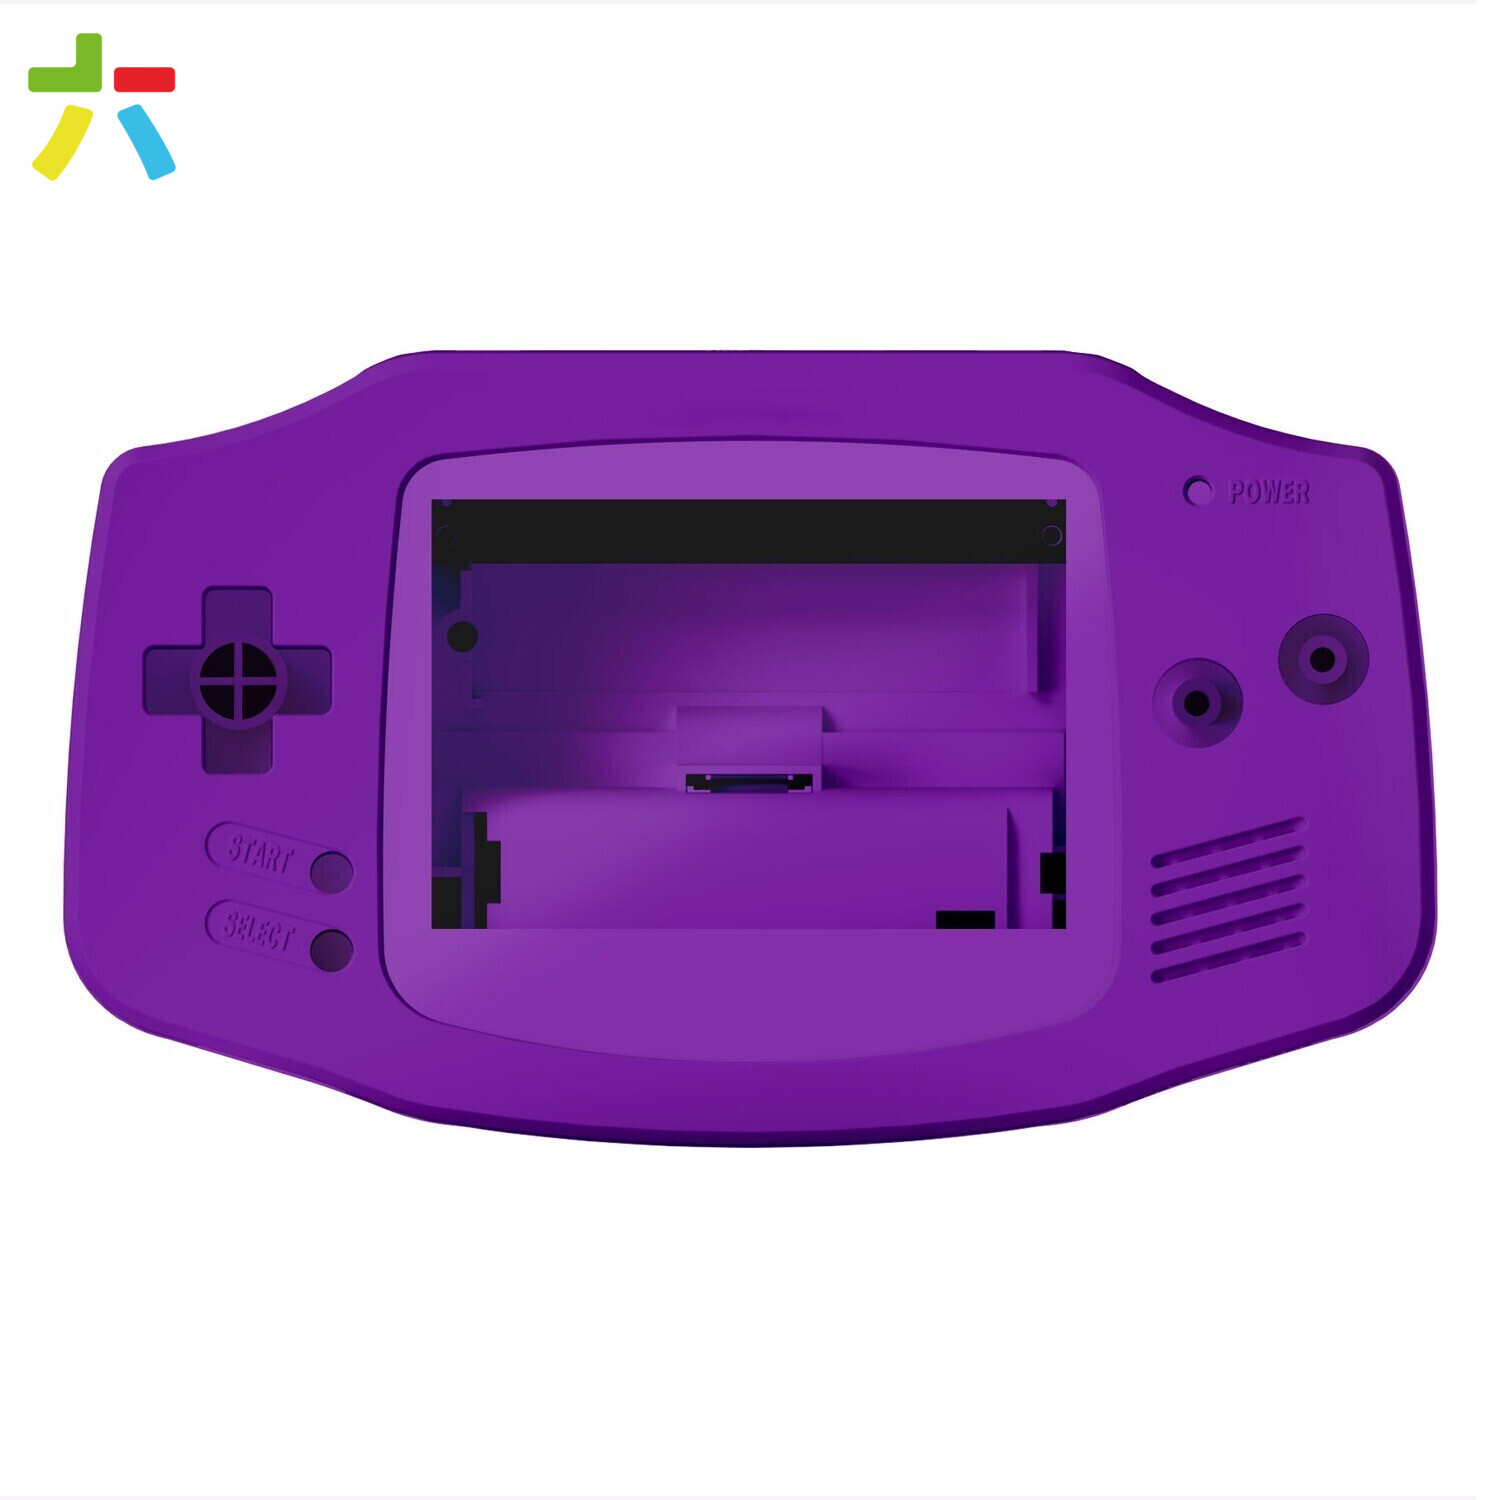 Game Boy Advance Shell (Solid Purple)